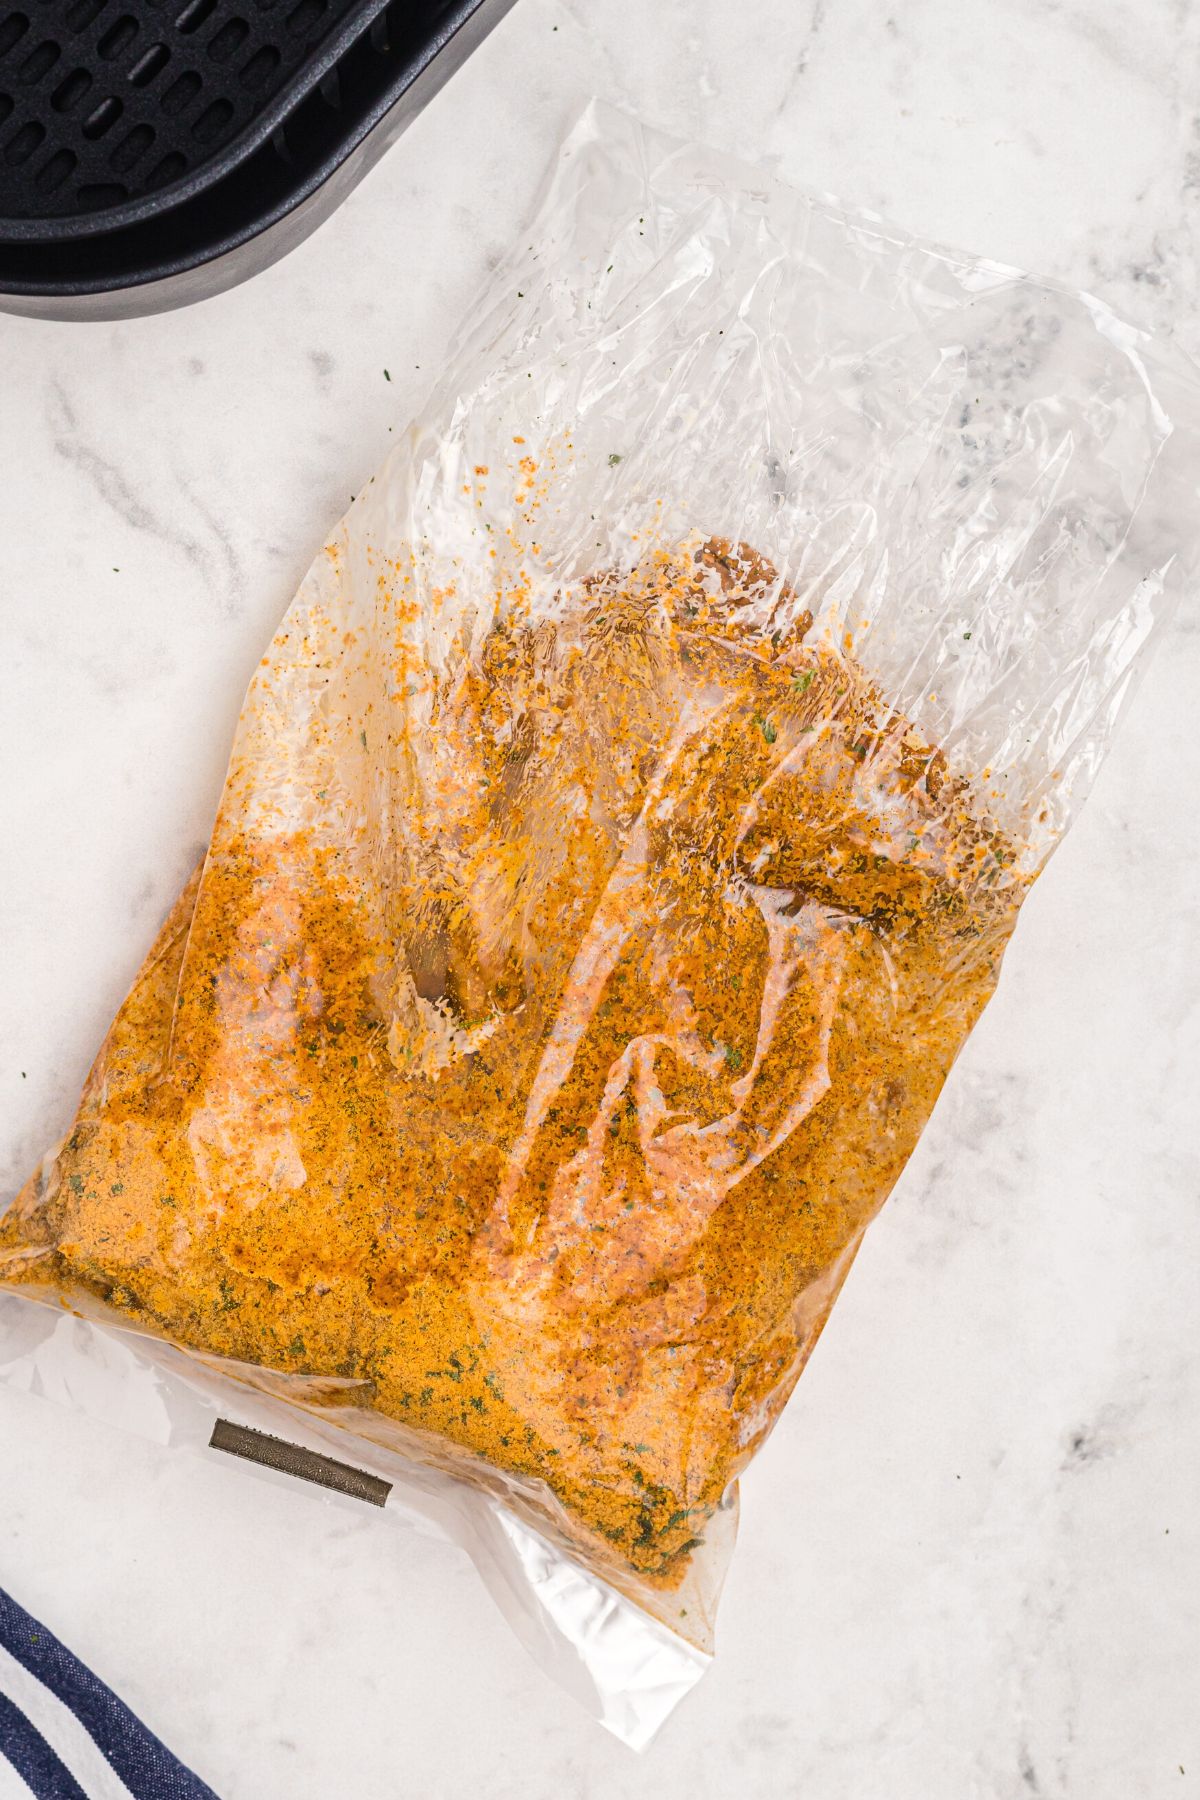 Plastic bag with chicken and seasonings shaken to coat chicken